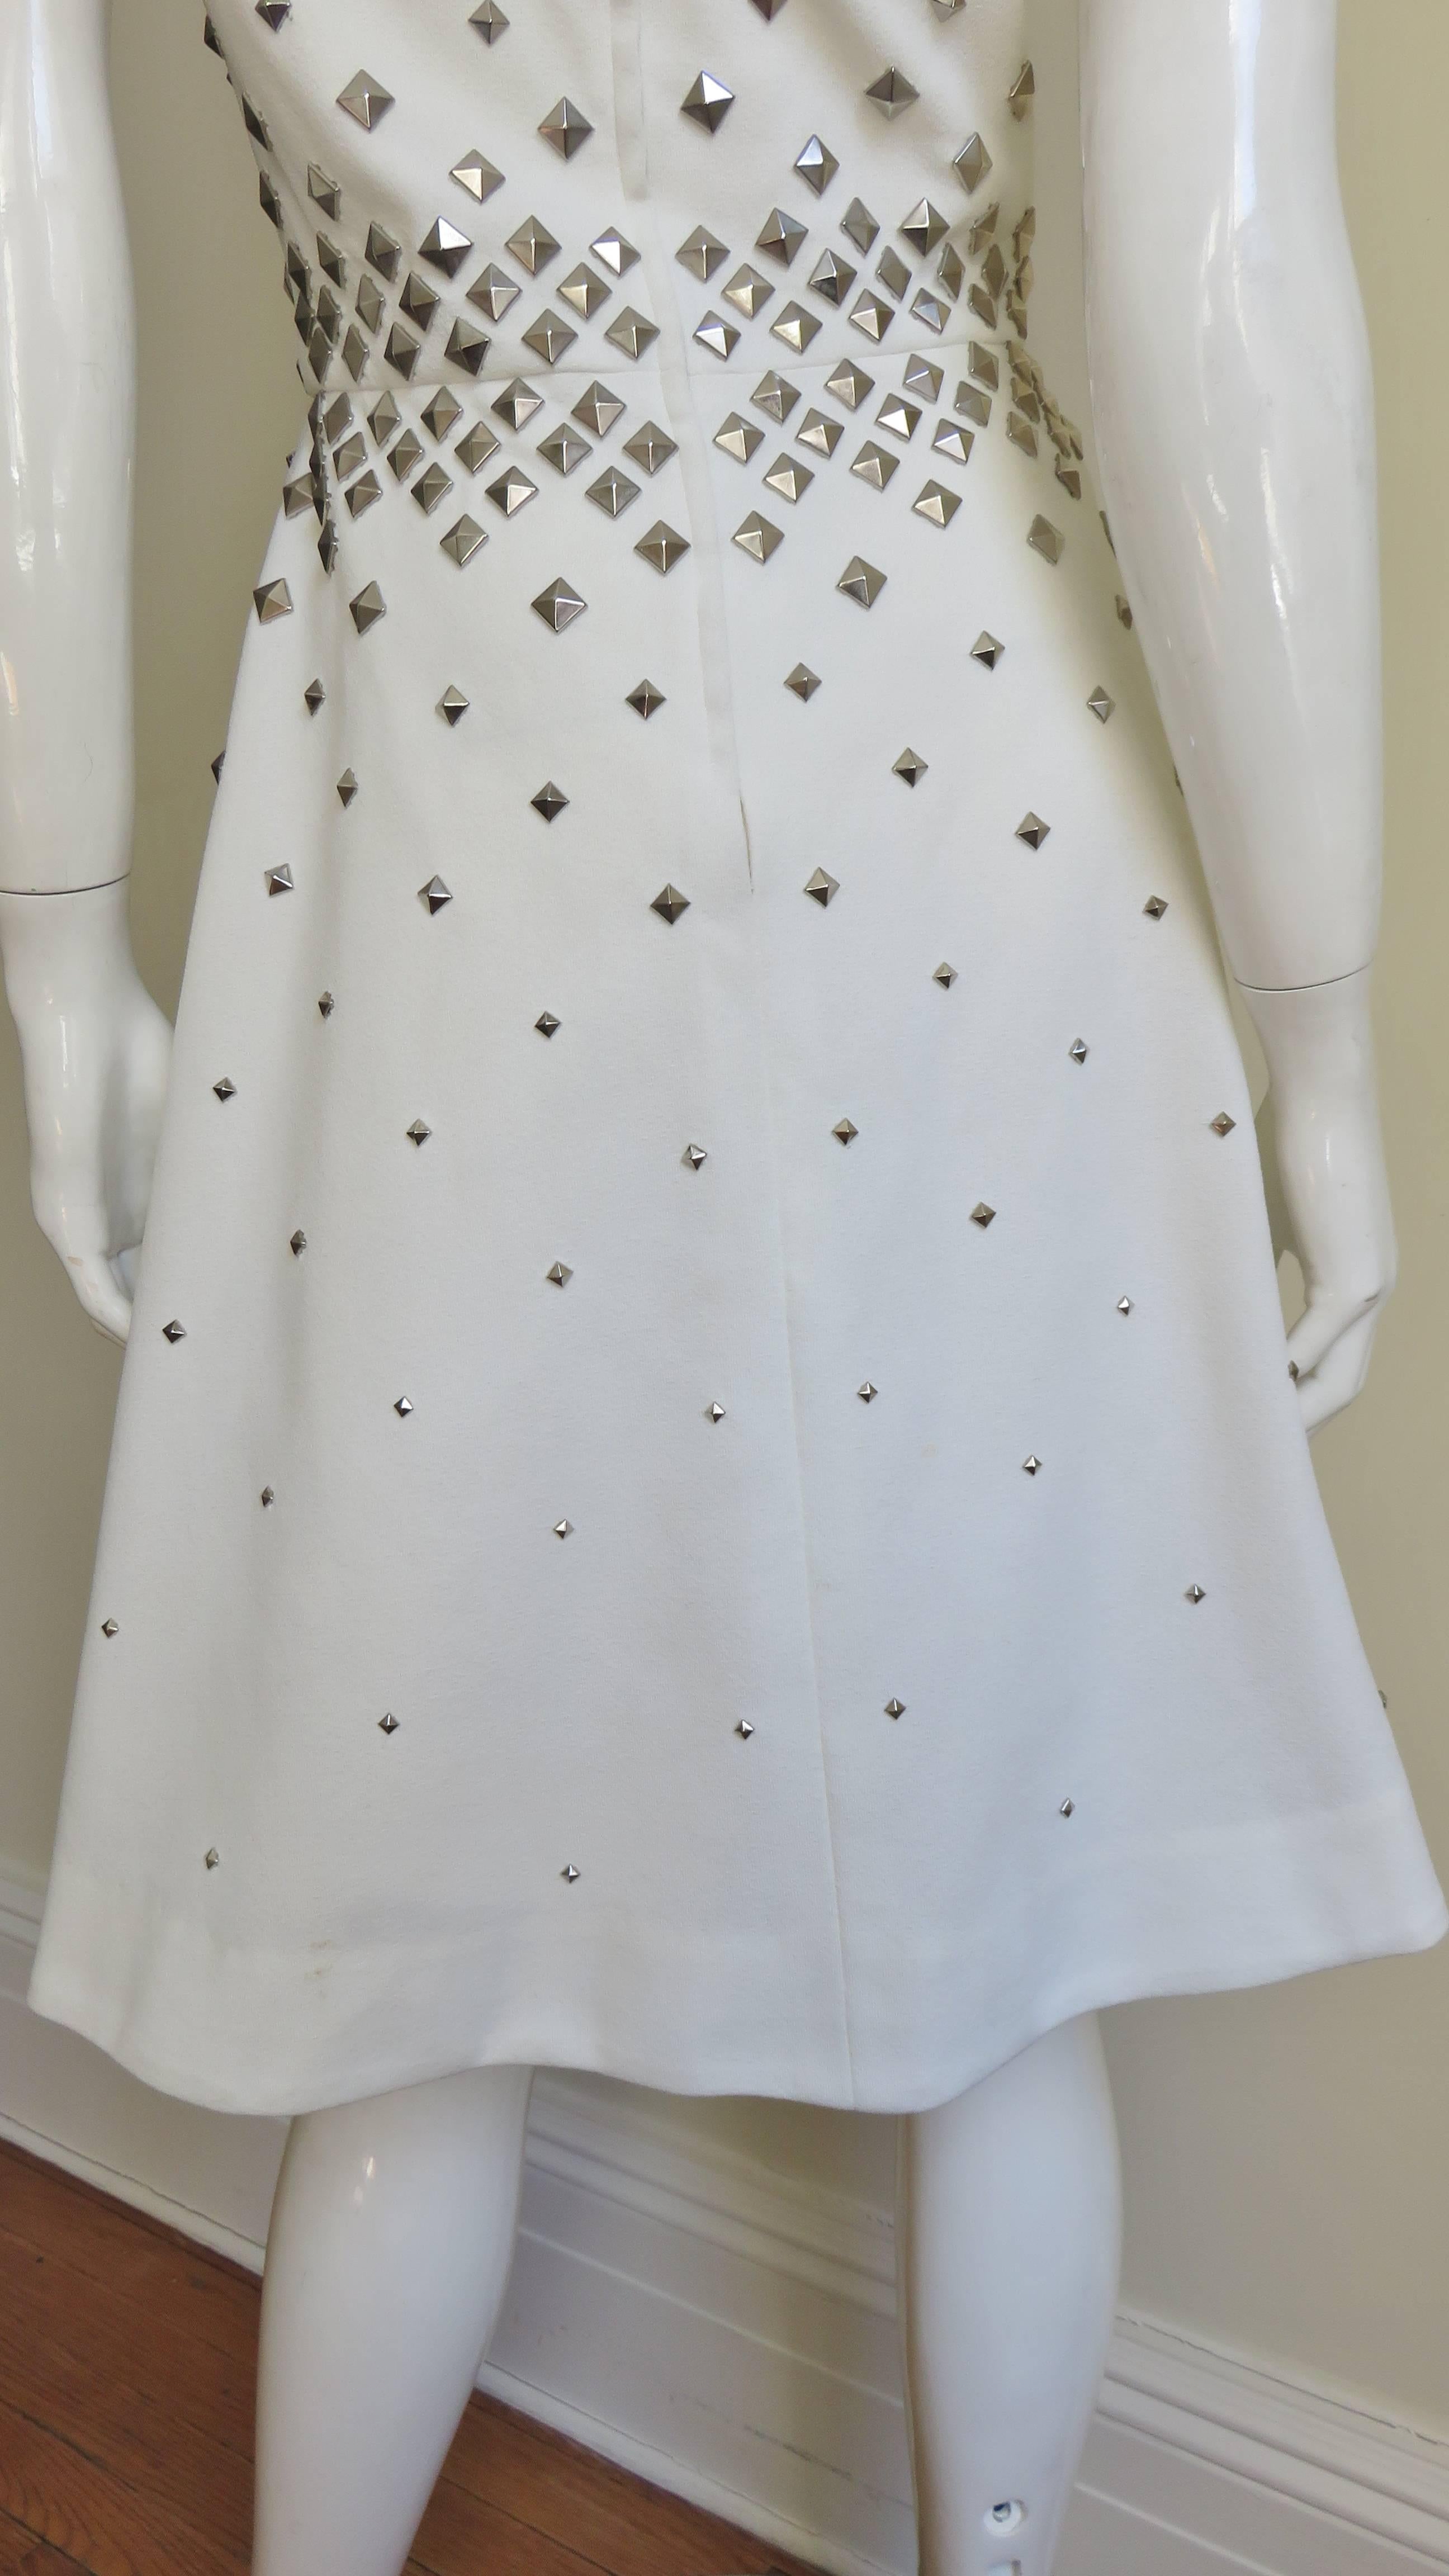  Sydney North Dress with Studs 1960s 4